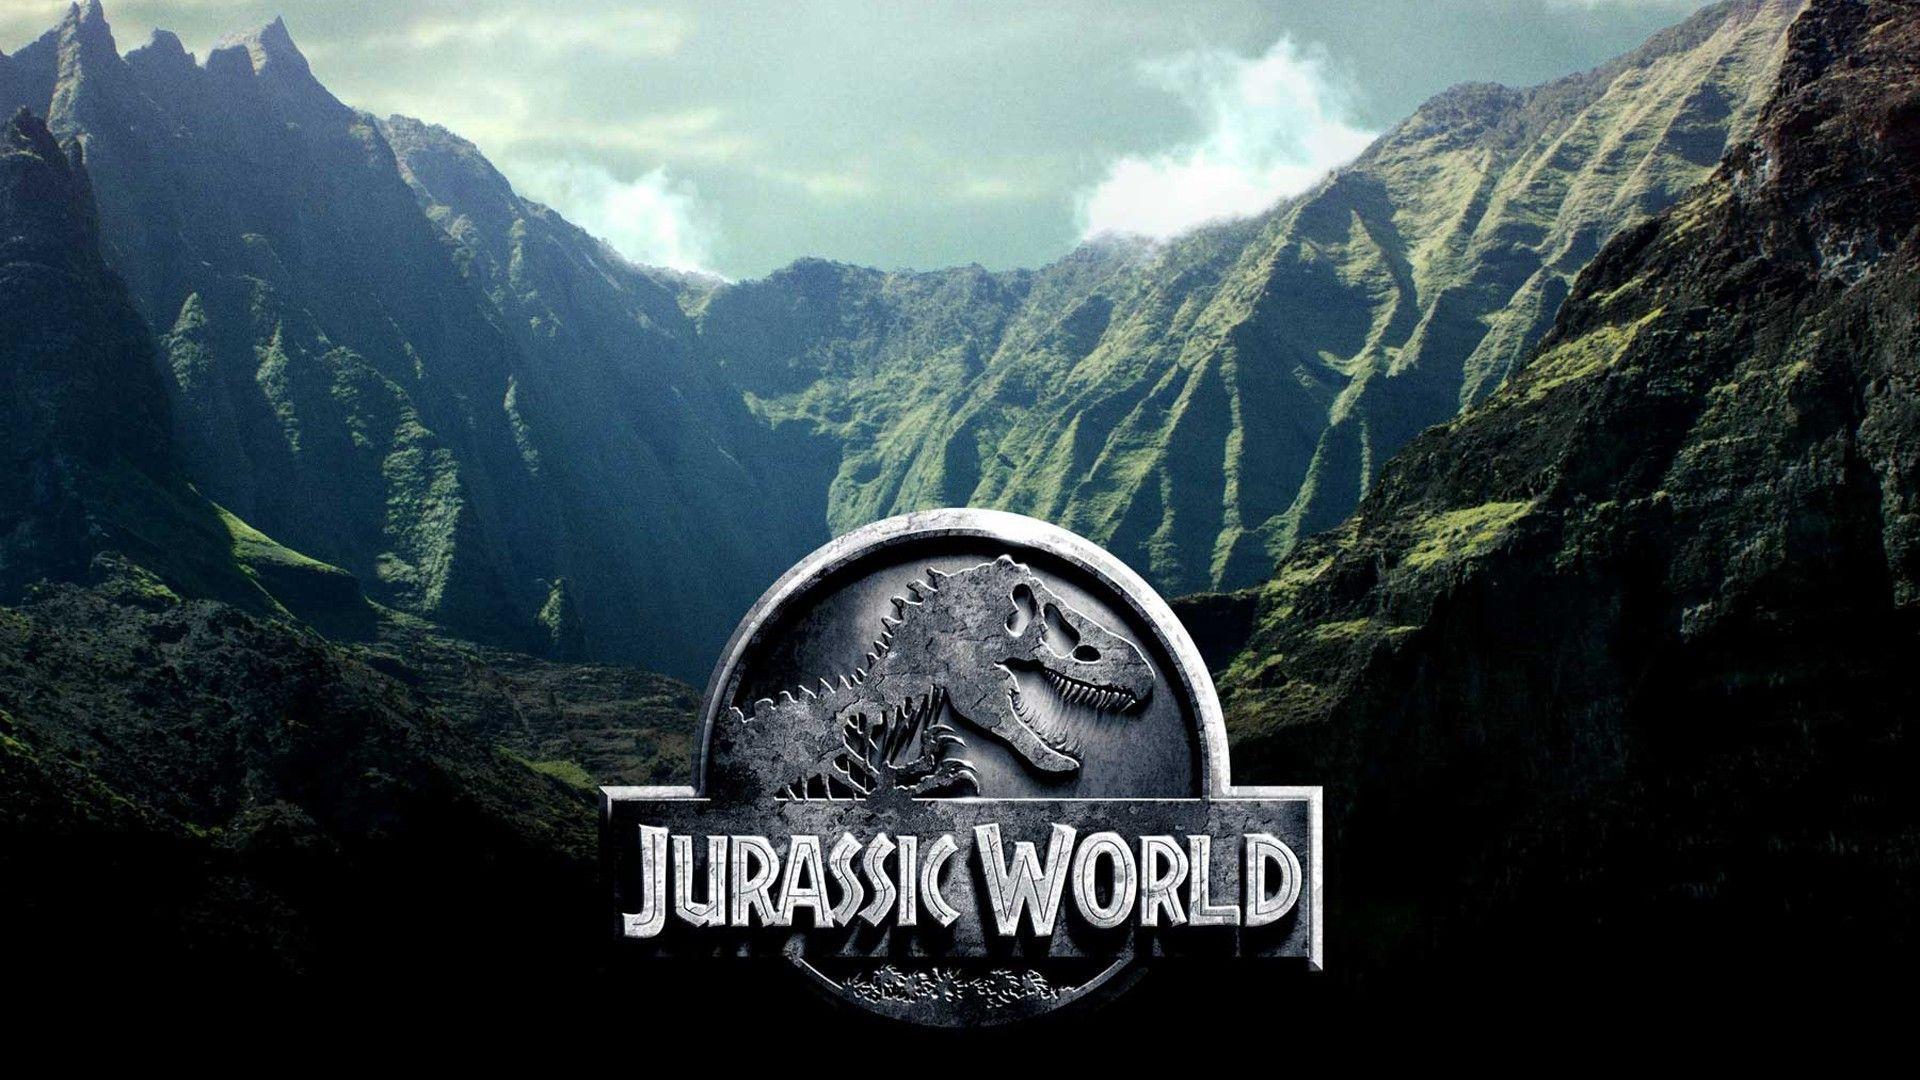 Jurassic World 3 Wallpaper 4k - 1080p Jurassic World Wallpaper 4k ...